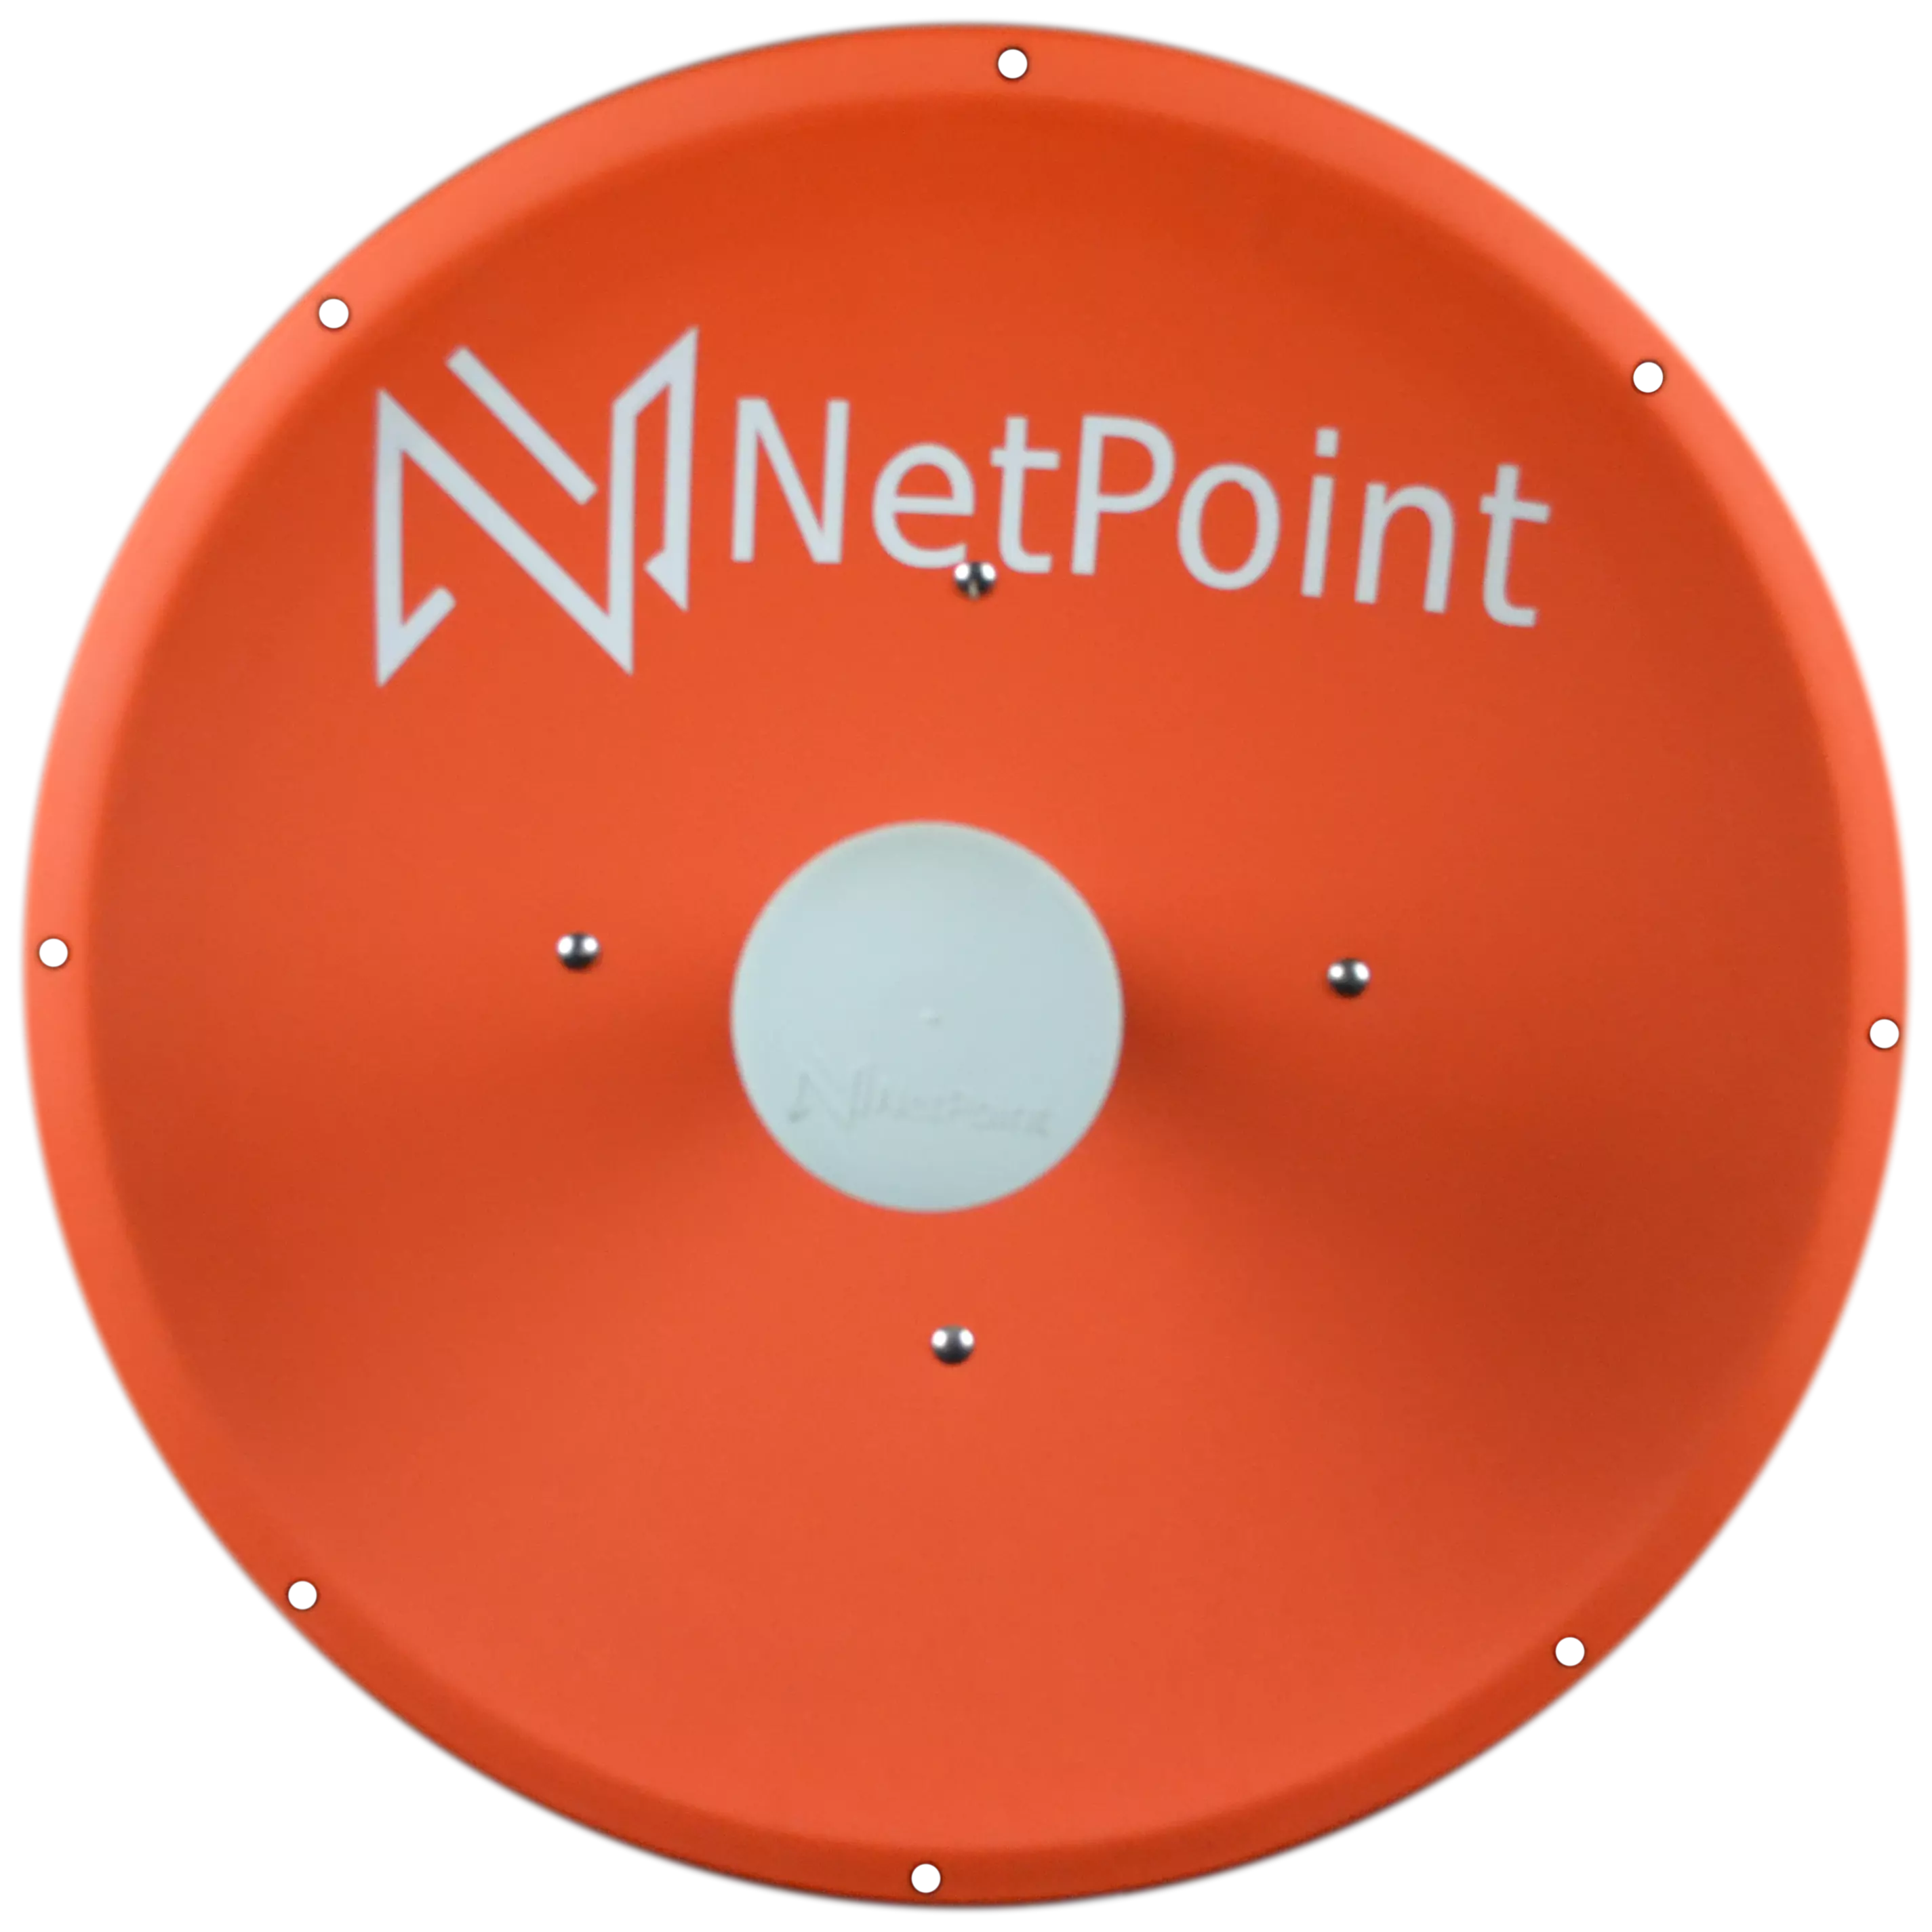 Antena para WISP - NetPoint Parabolic Antenas de 37 dBi NPTR3